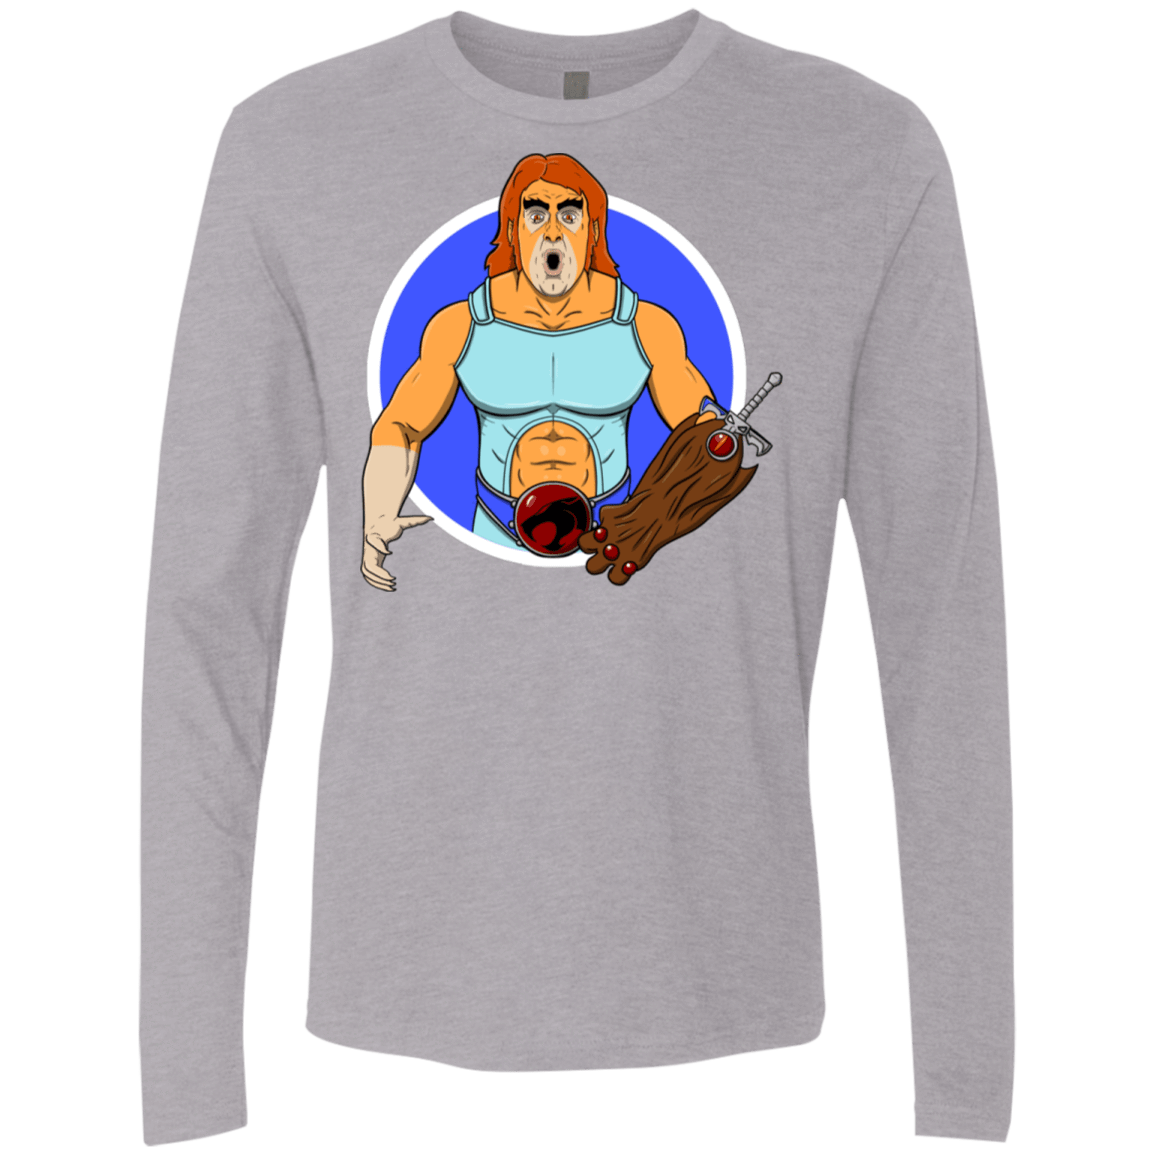 T-Shirts Heather Grey / S Natureboy Woooo Men's Premium Long Sleeve